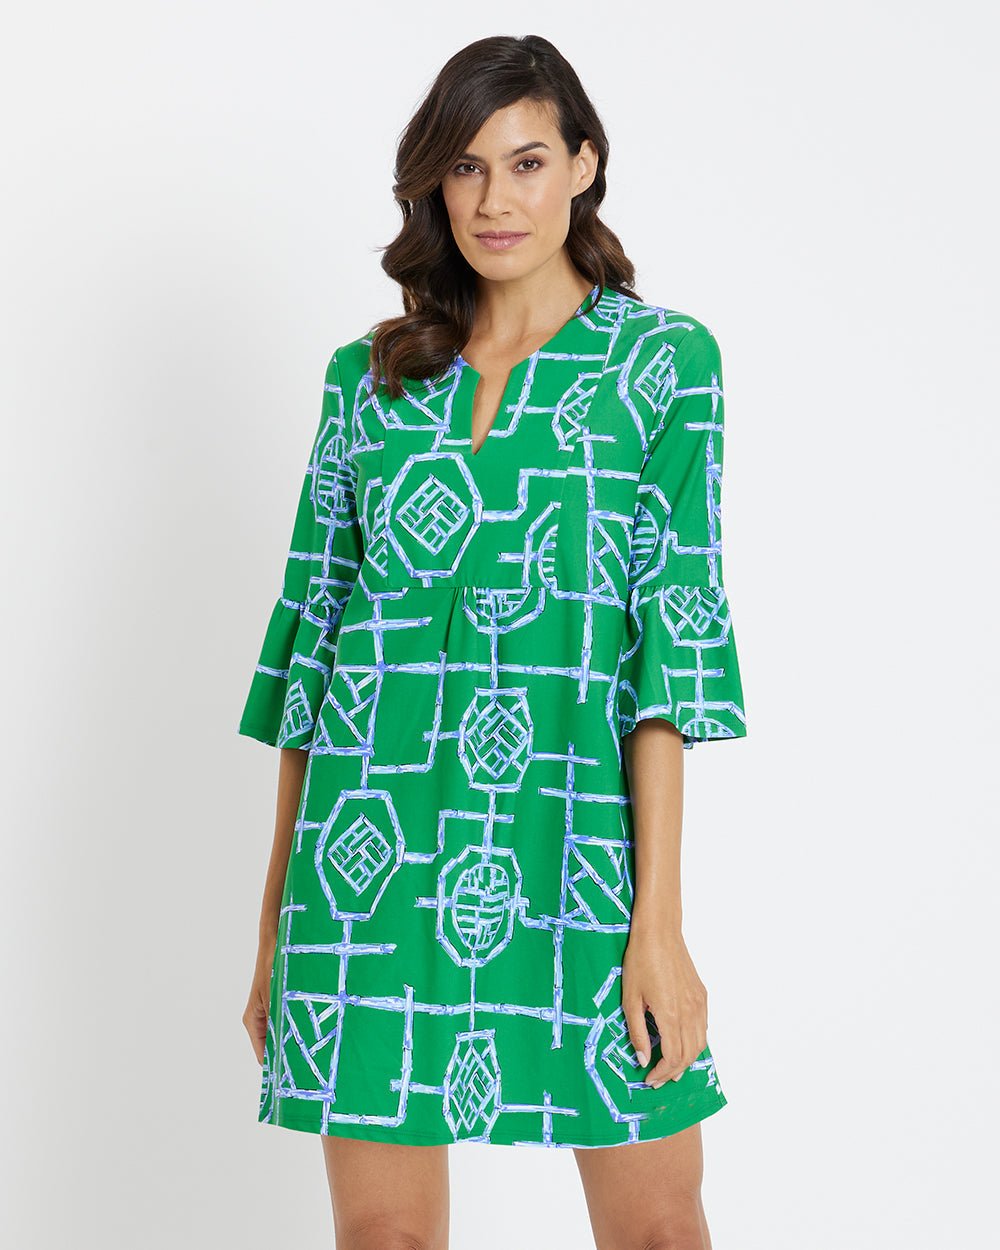 Jude Connally - Kerry Bamboo Lattice Dress: Shamrock - Shorely Chic Boutique